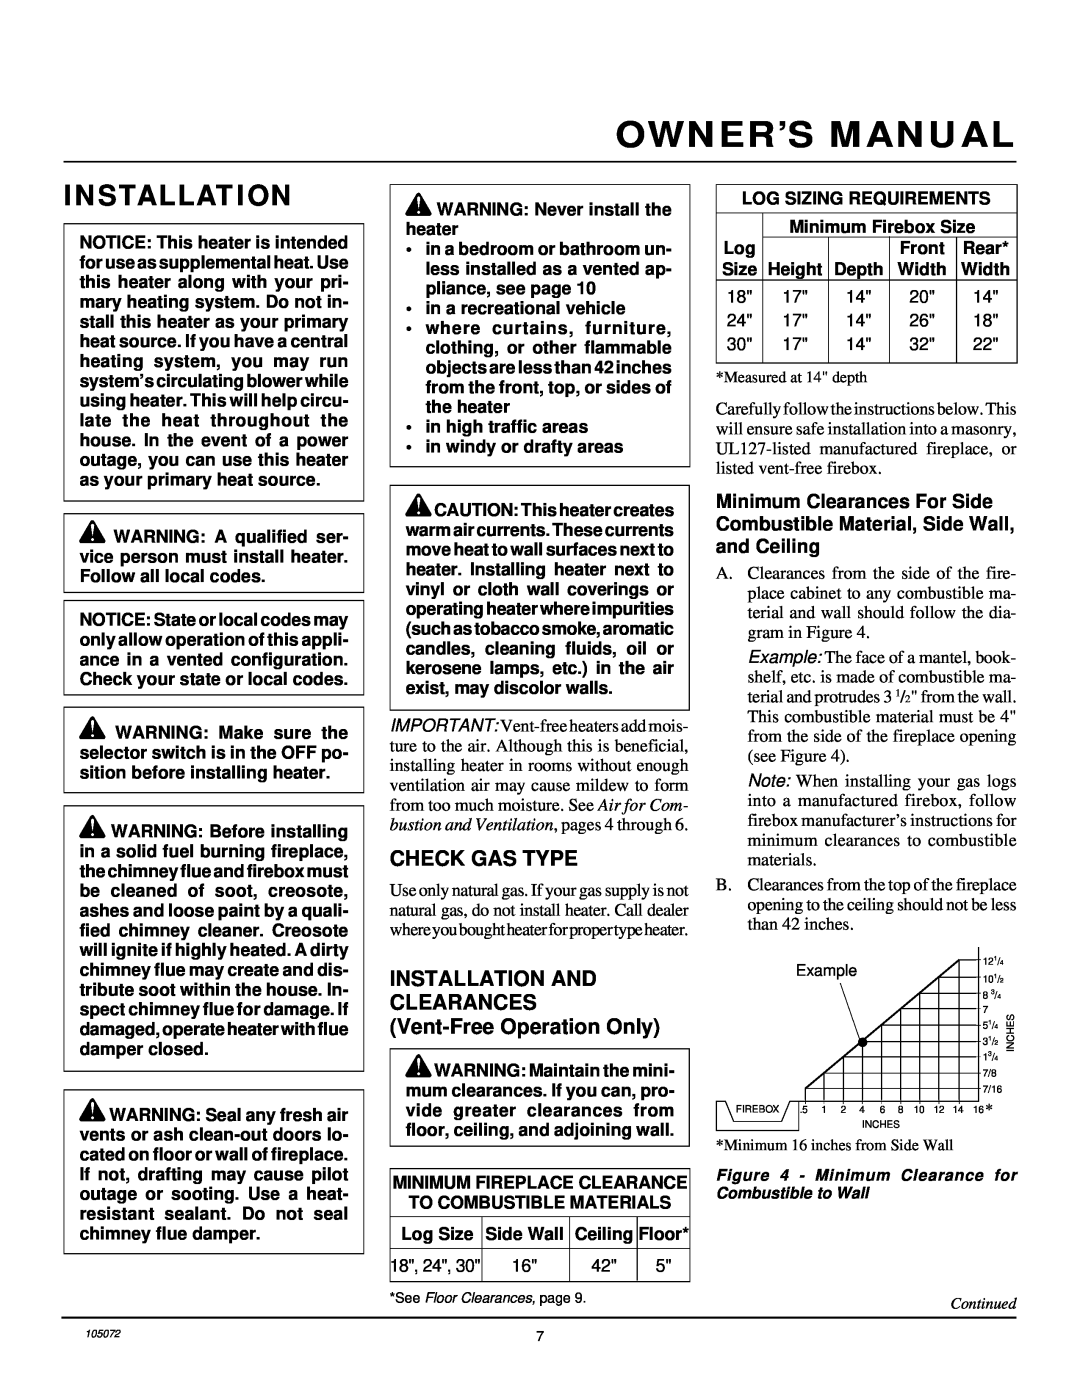 Desa VFN24R, VFN30R, VFN18R installation manual Installation, Check Gas Type 